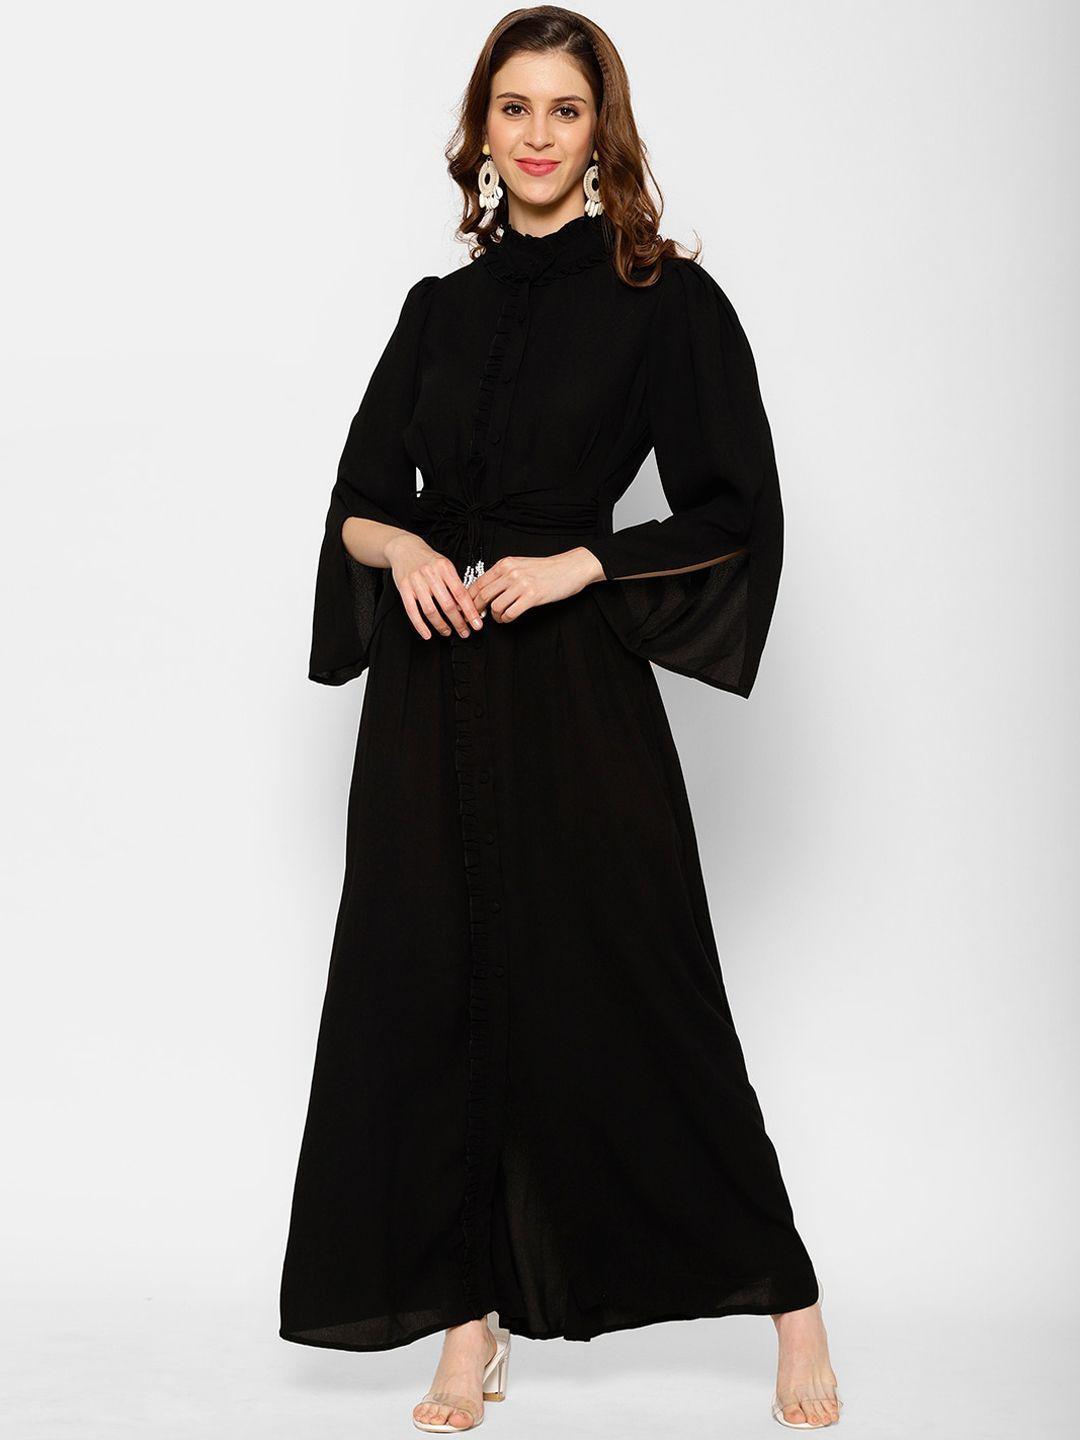 kassually-women-black-solid-maxi-dress